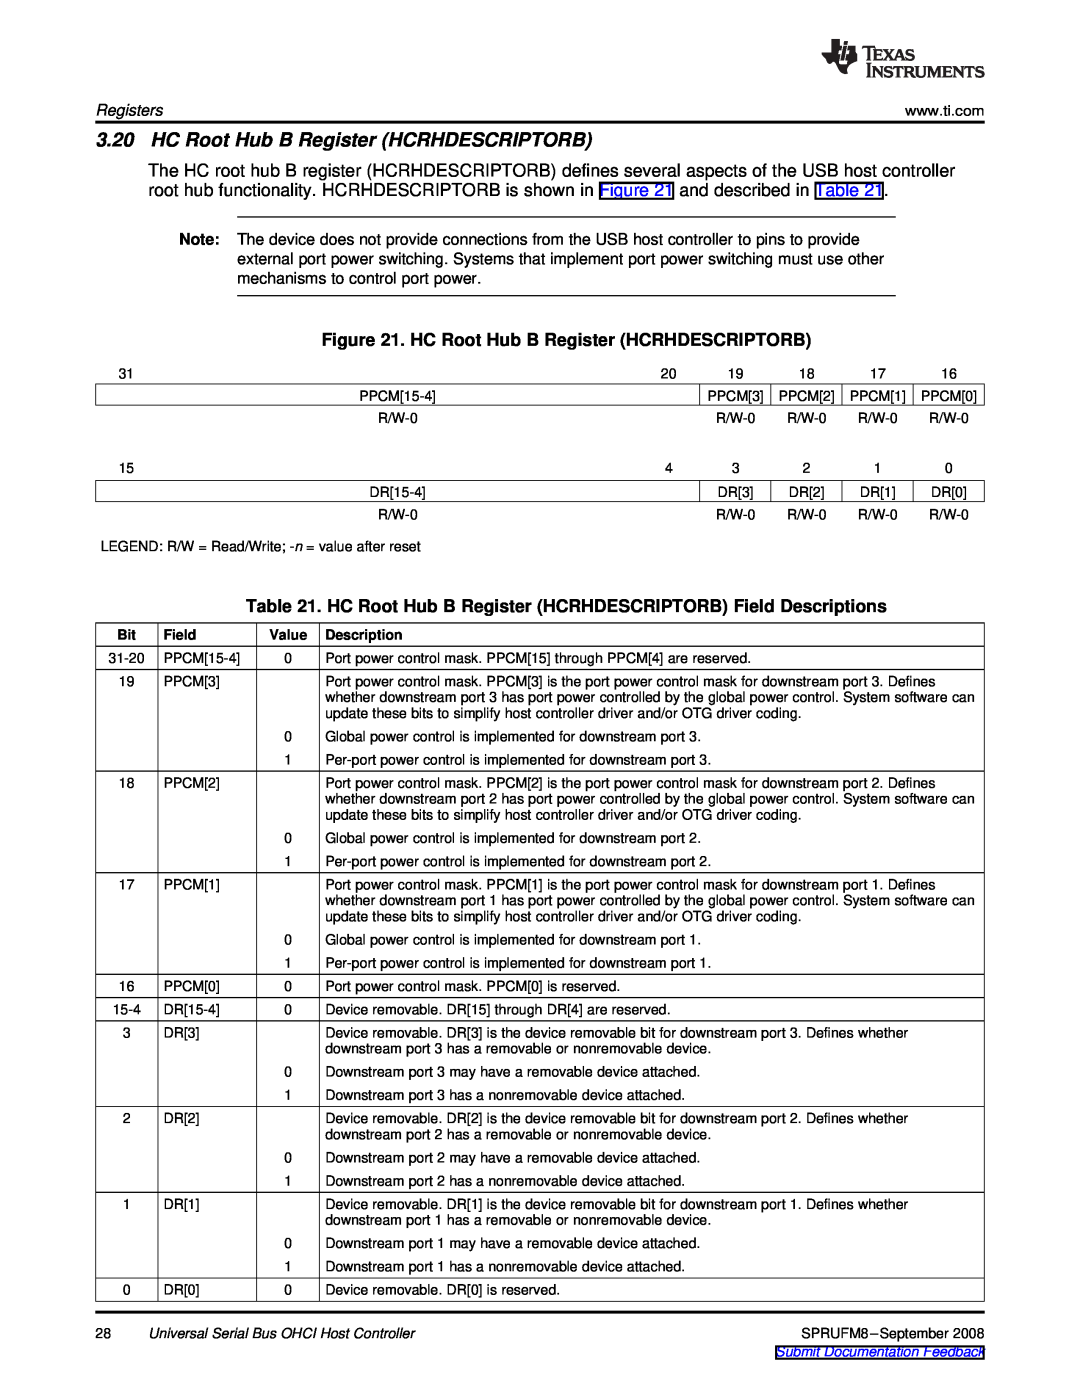 Texas Instruments TMS320C6747 DSP manual HC Root Hub B Register HCRHDESCRIPTORB, Registers, Field, Description 